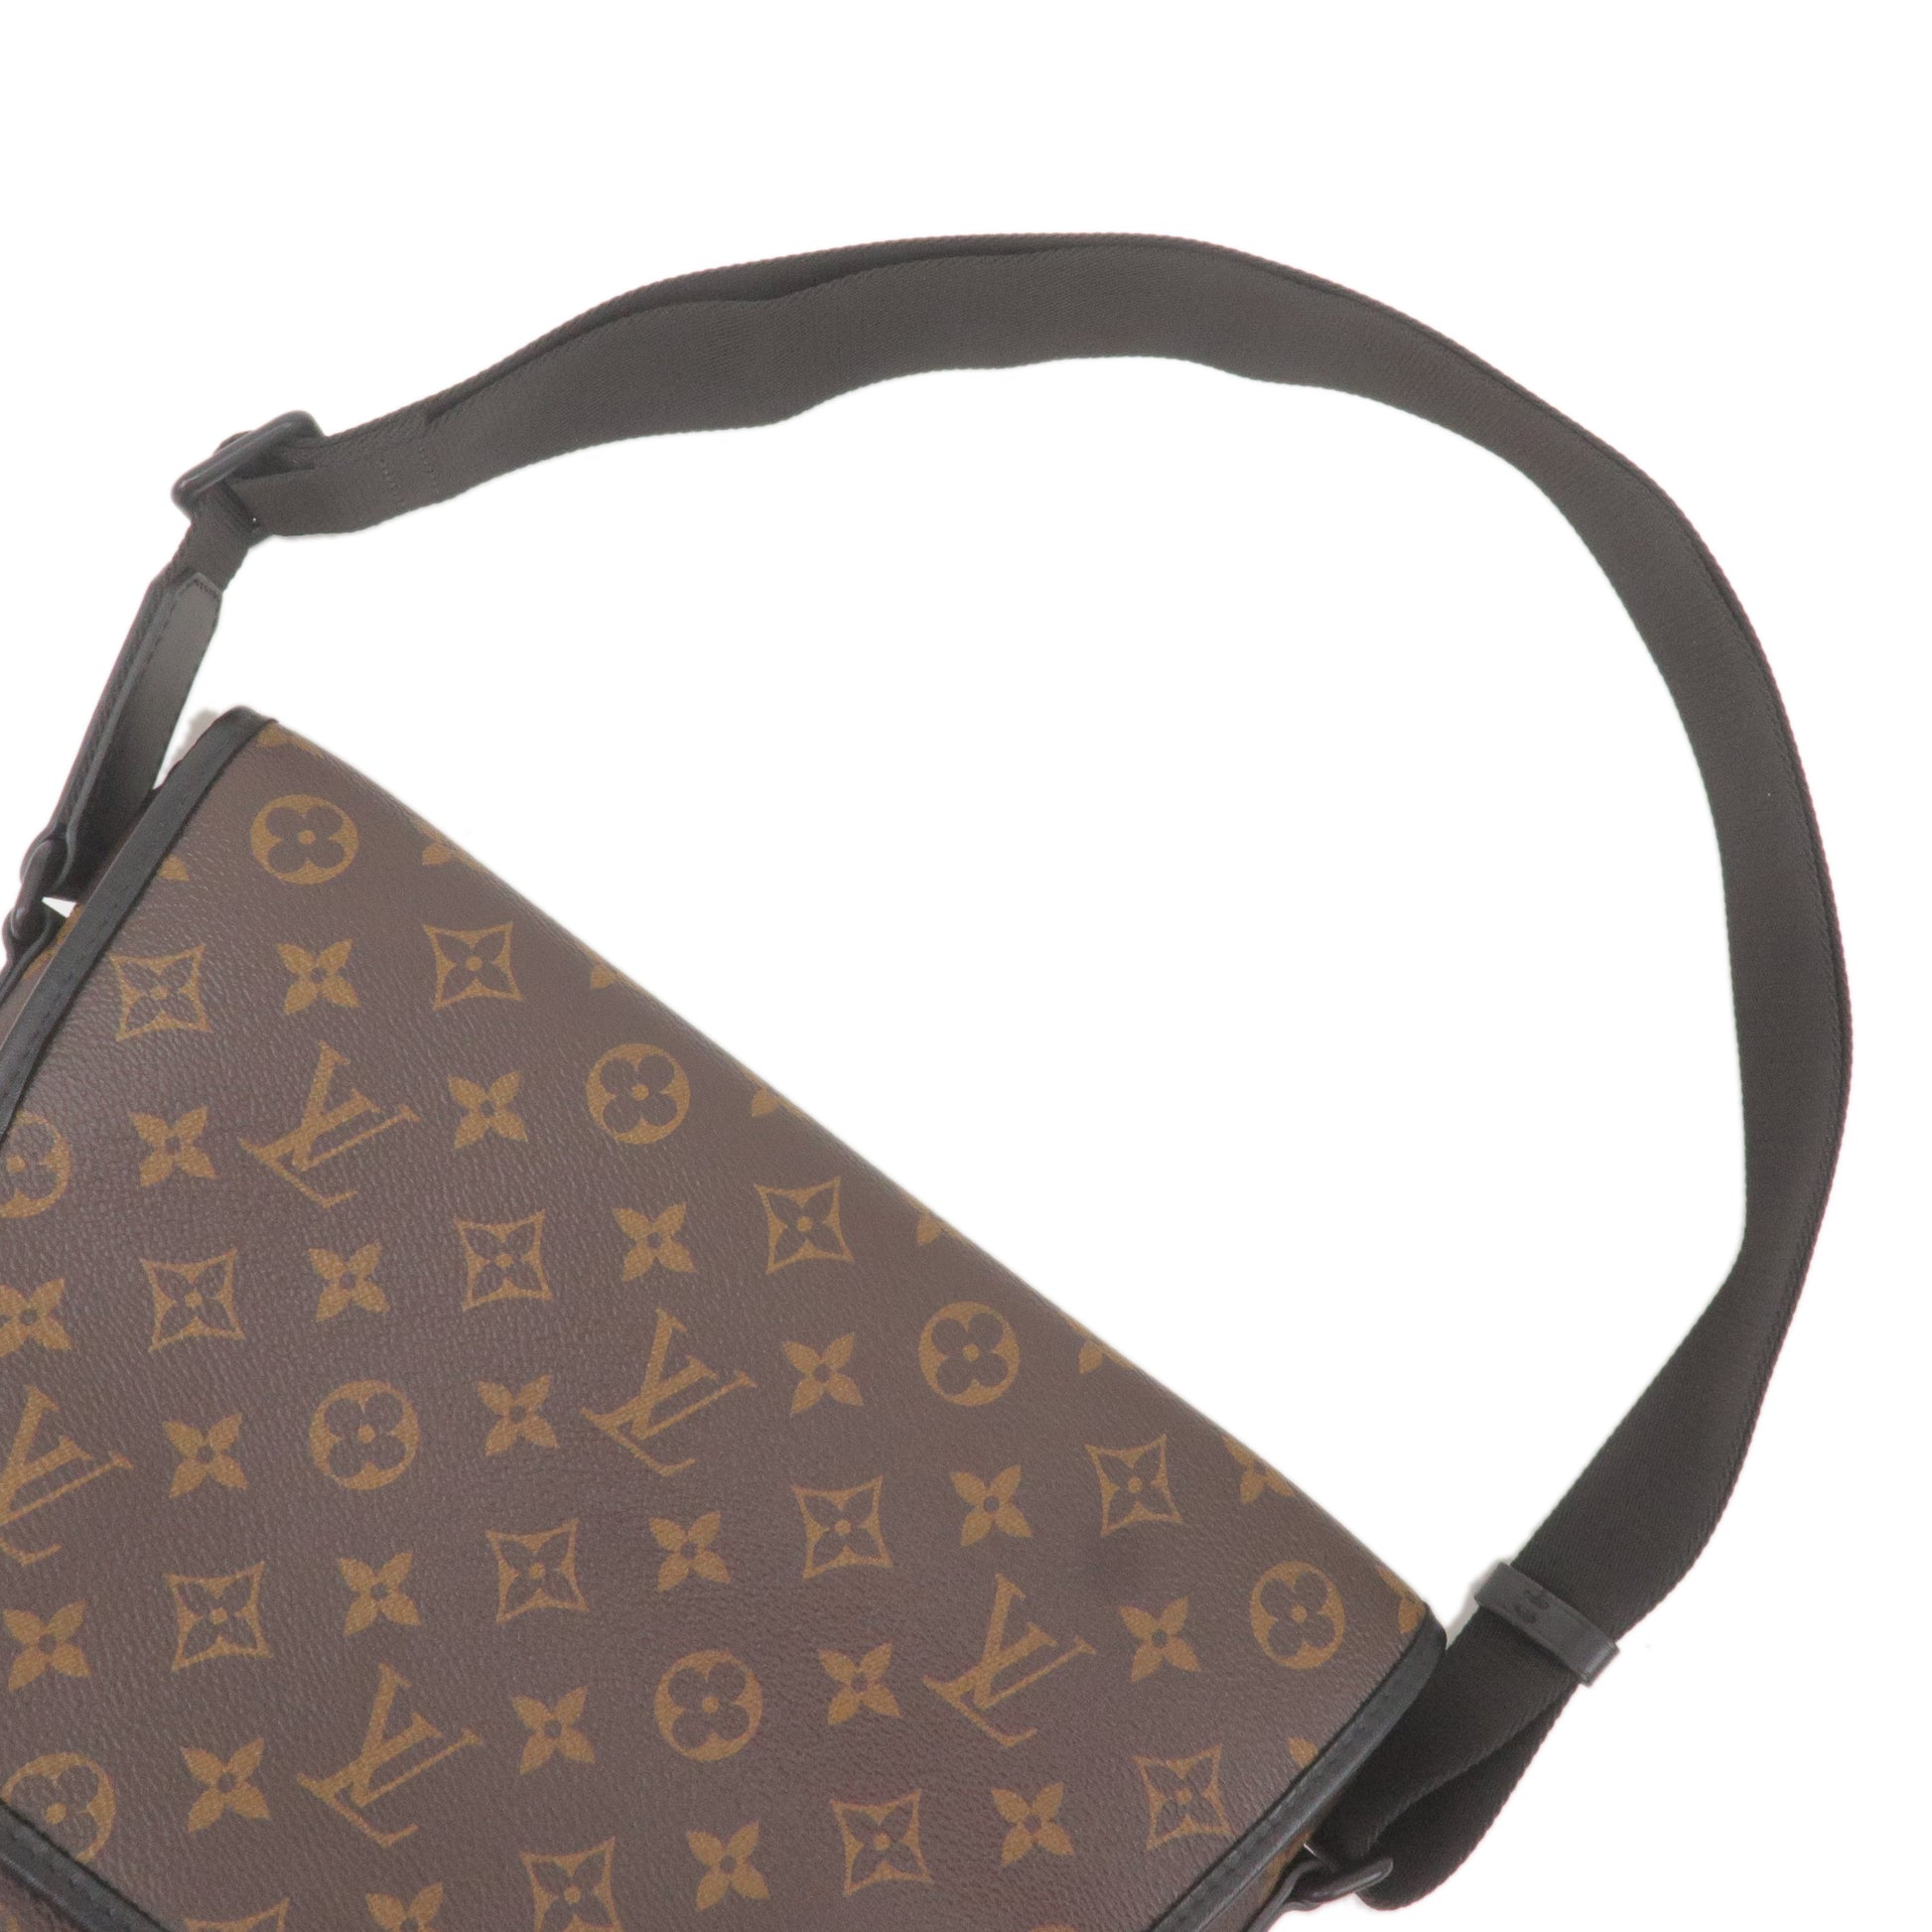 Louis Vuitton 2014 pre-owned Lockit PM Bag - Farfetch